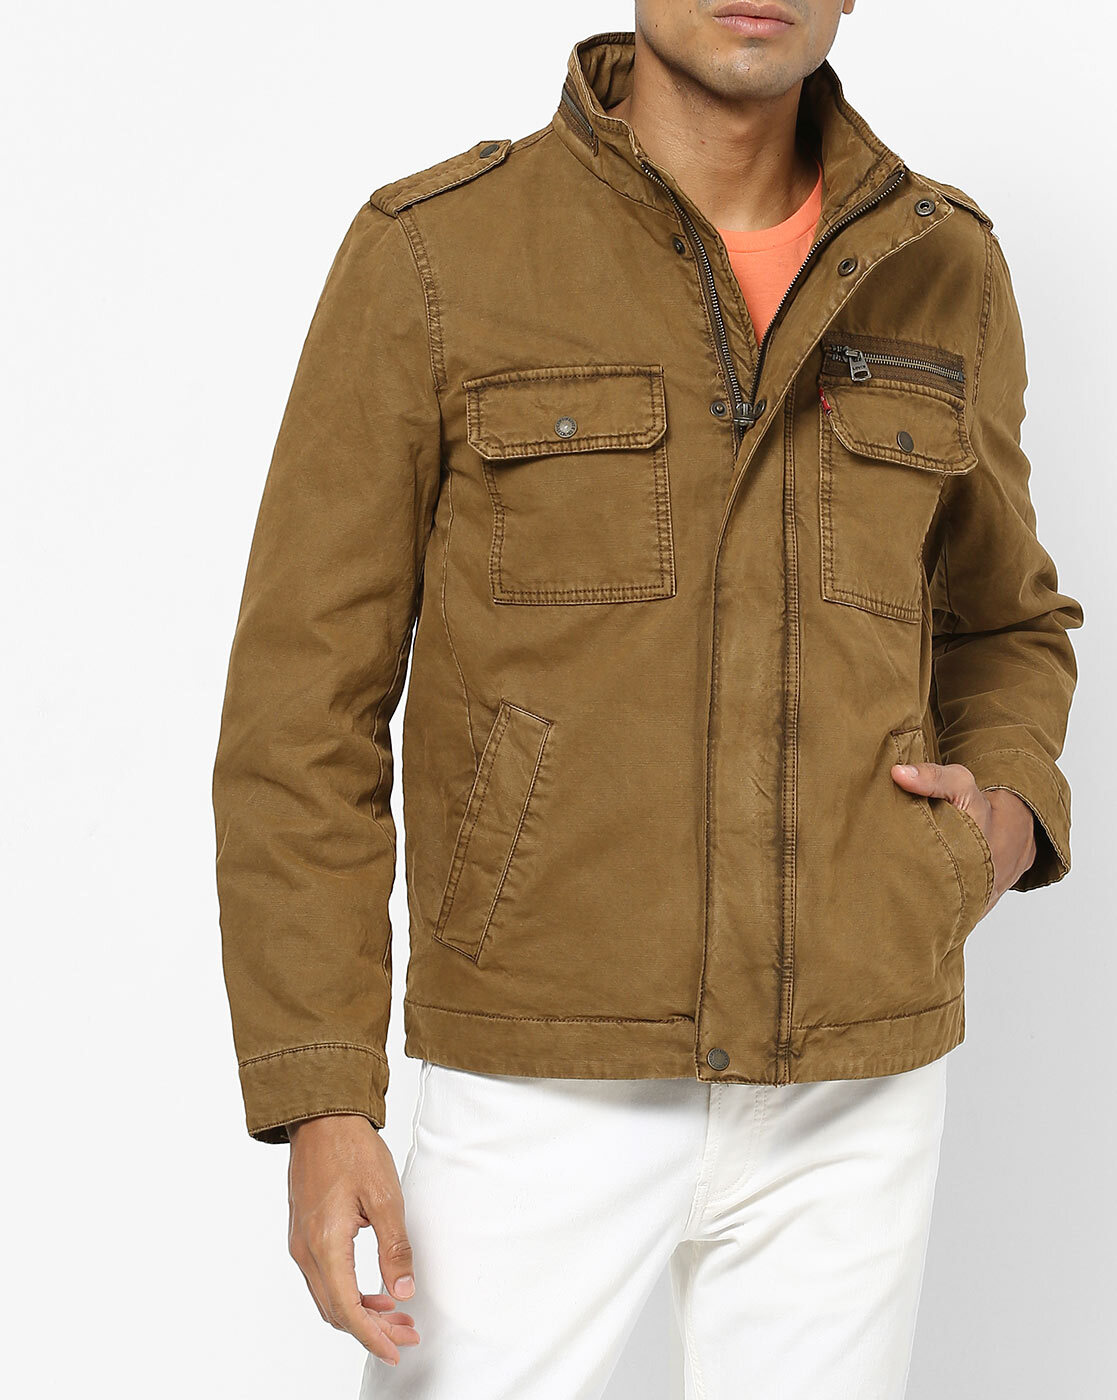 Buy Khaki Brown Jackets & Coats for Men by LEVIS Online 